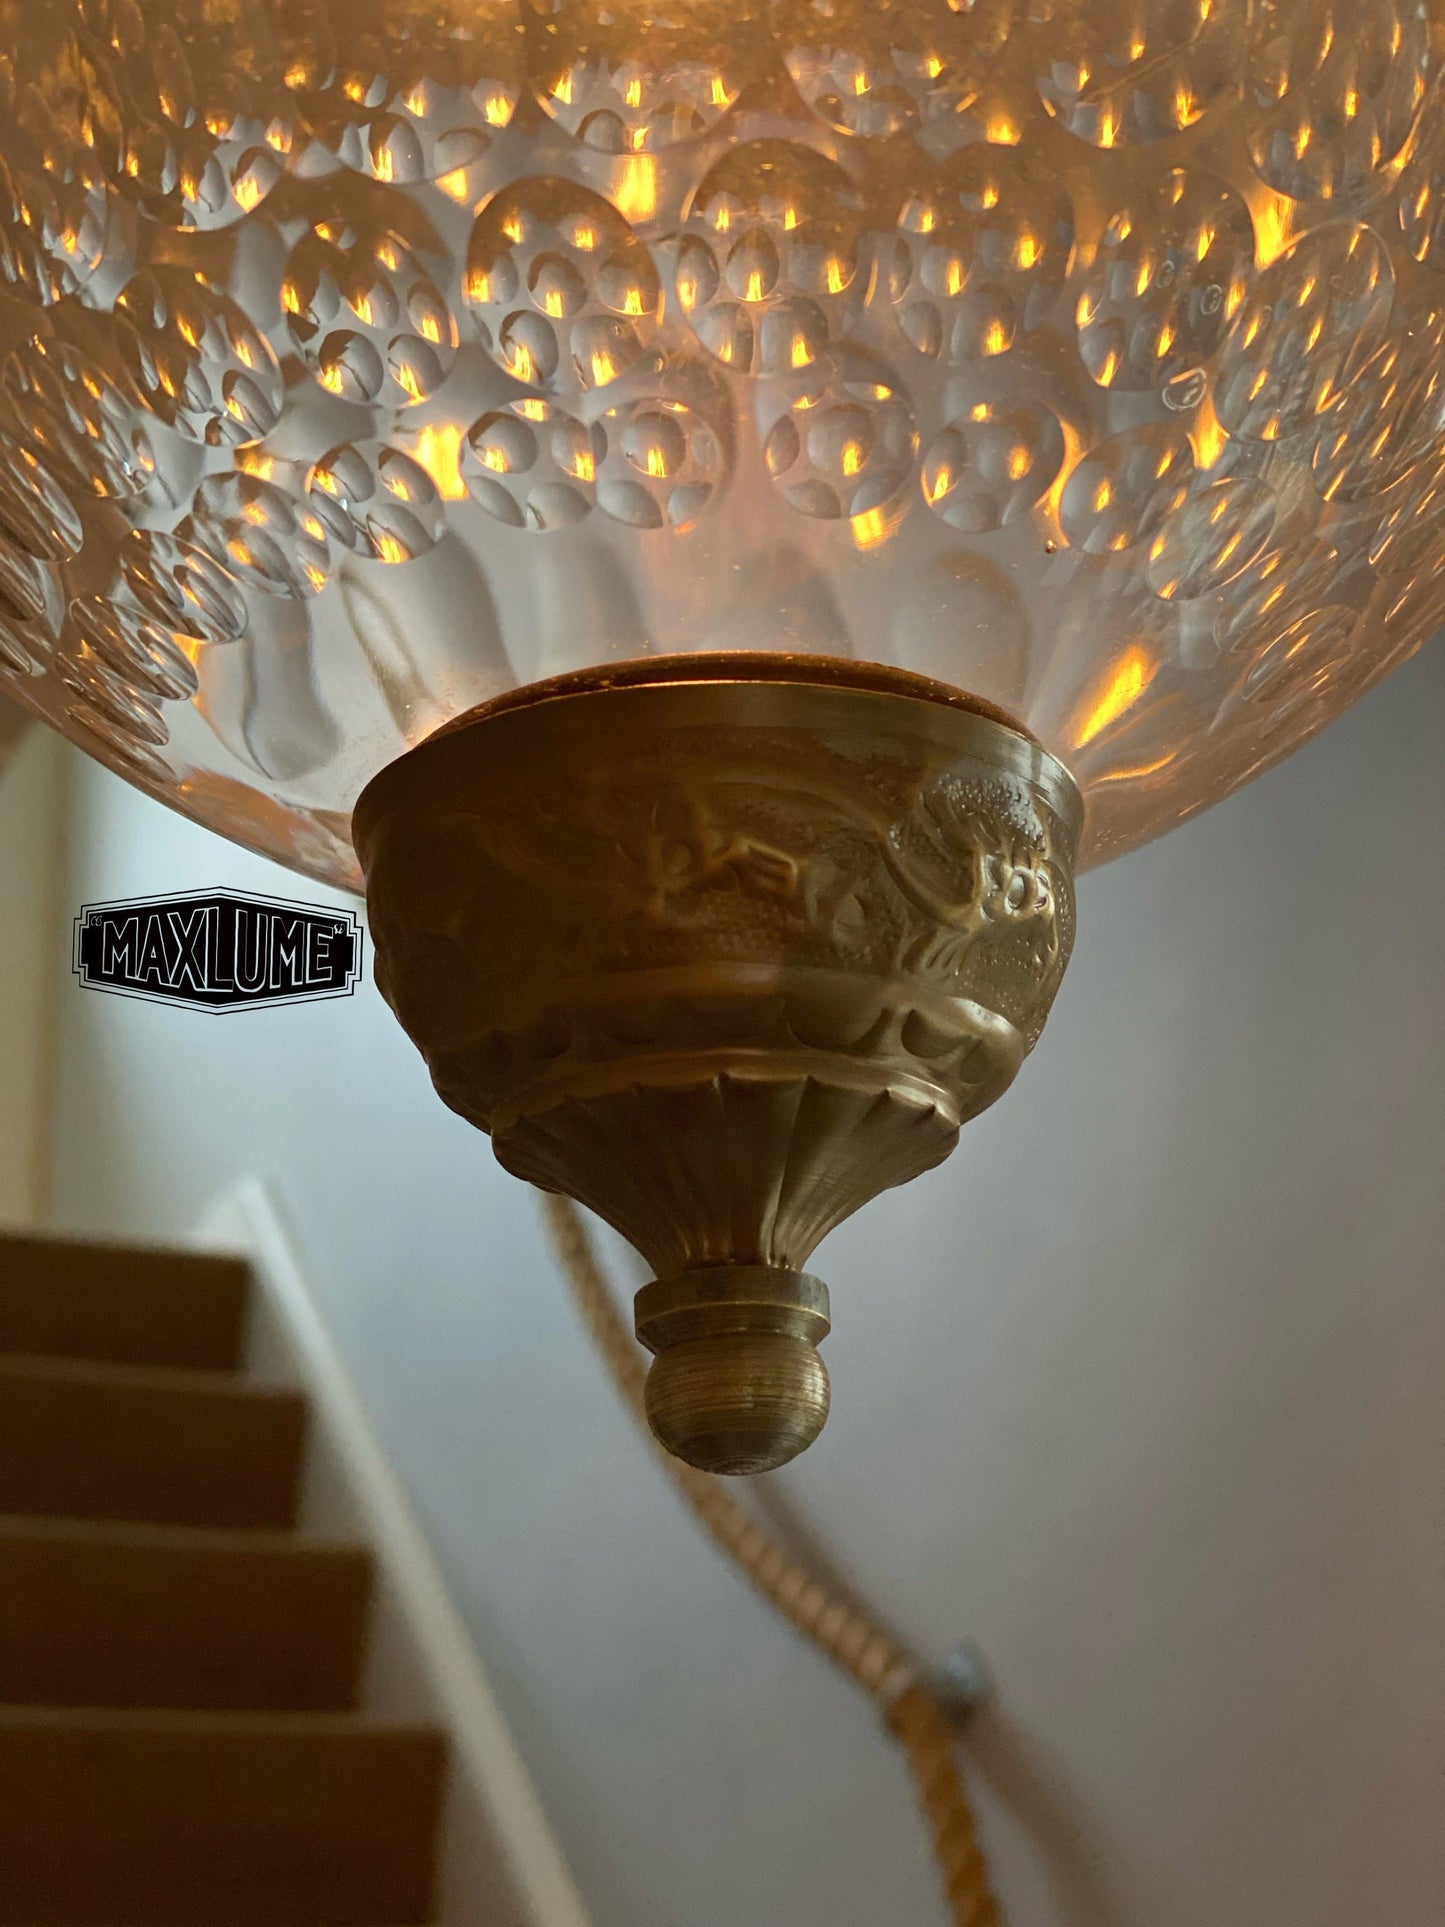 Maxlume ~ Bell Jar Glass Globe Lantern Luxury Chandelier Light ceiling dining room Antique Bronze Georgian Ceiling Pendant